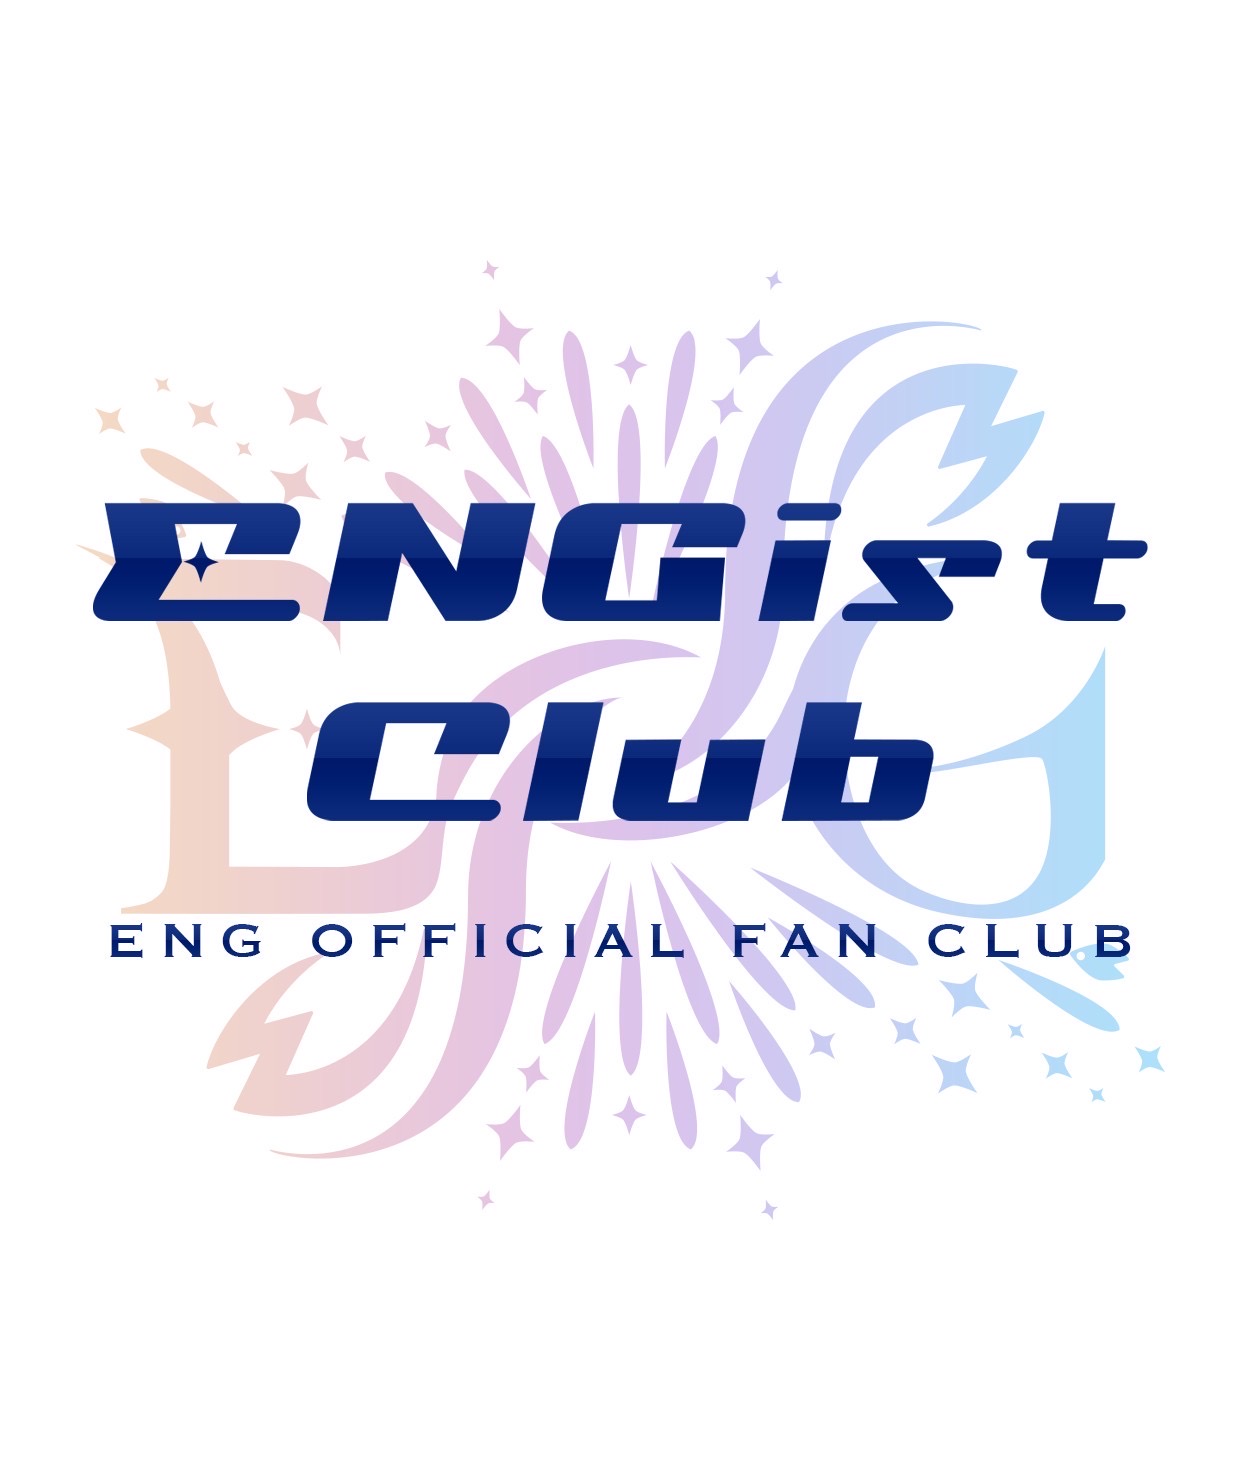 ENGist Club